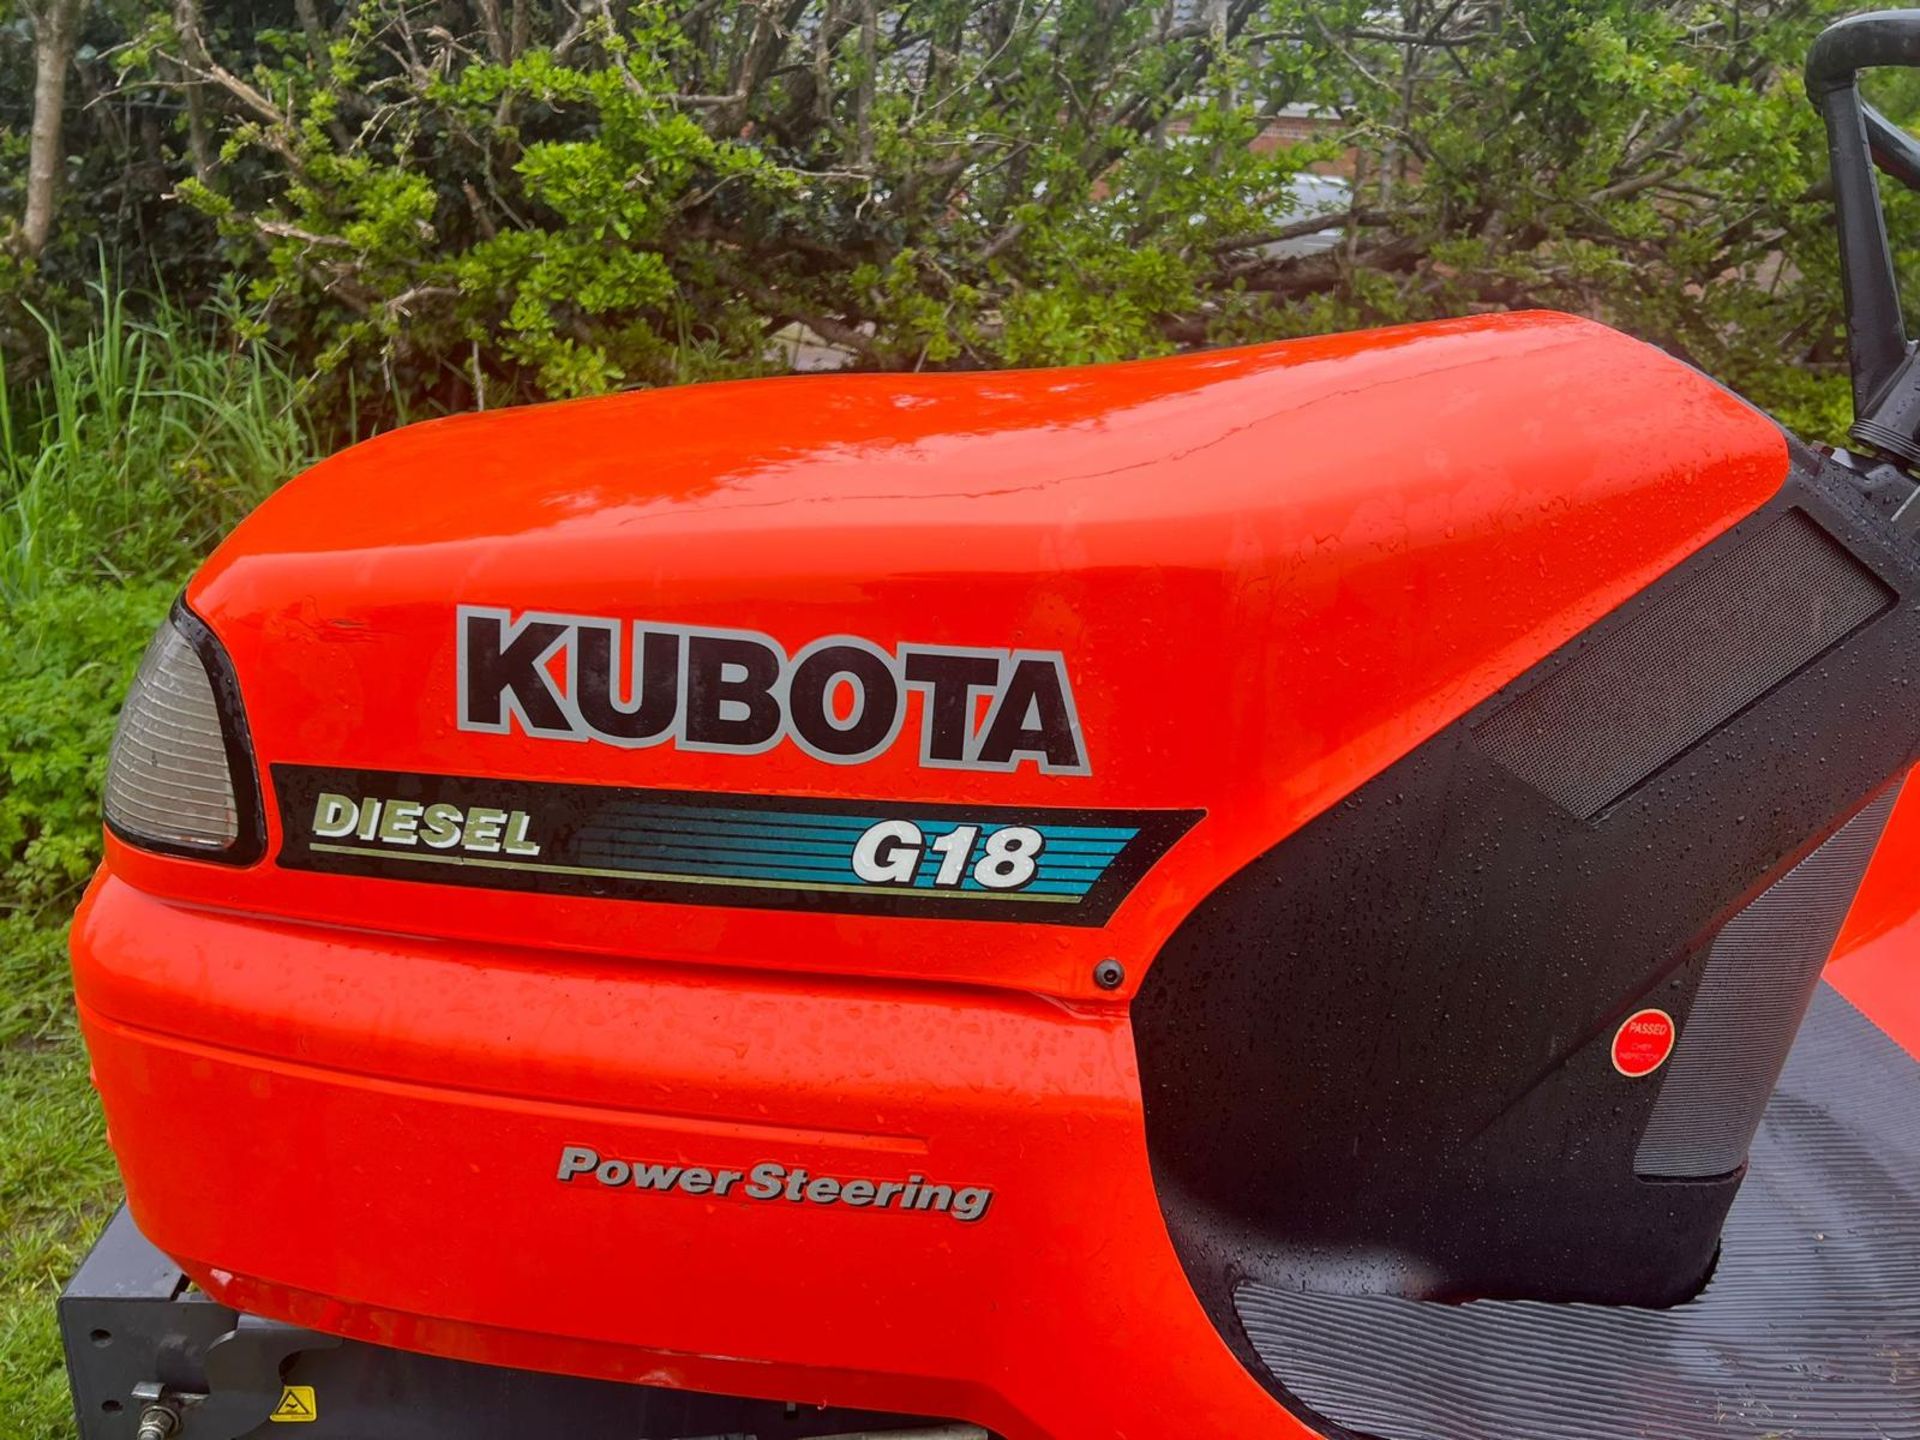 Kubota g18 ride on lawn mower (mint condition) *PLUS VAT* - Image 19 of 26